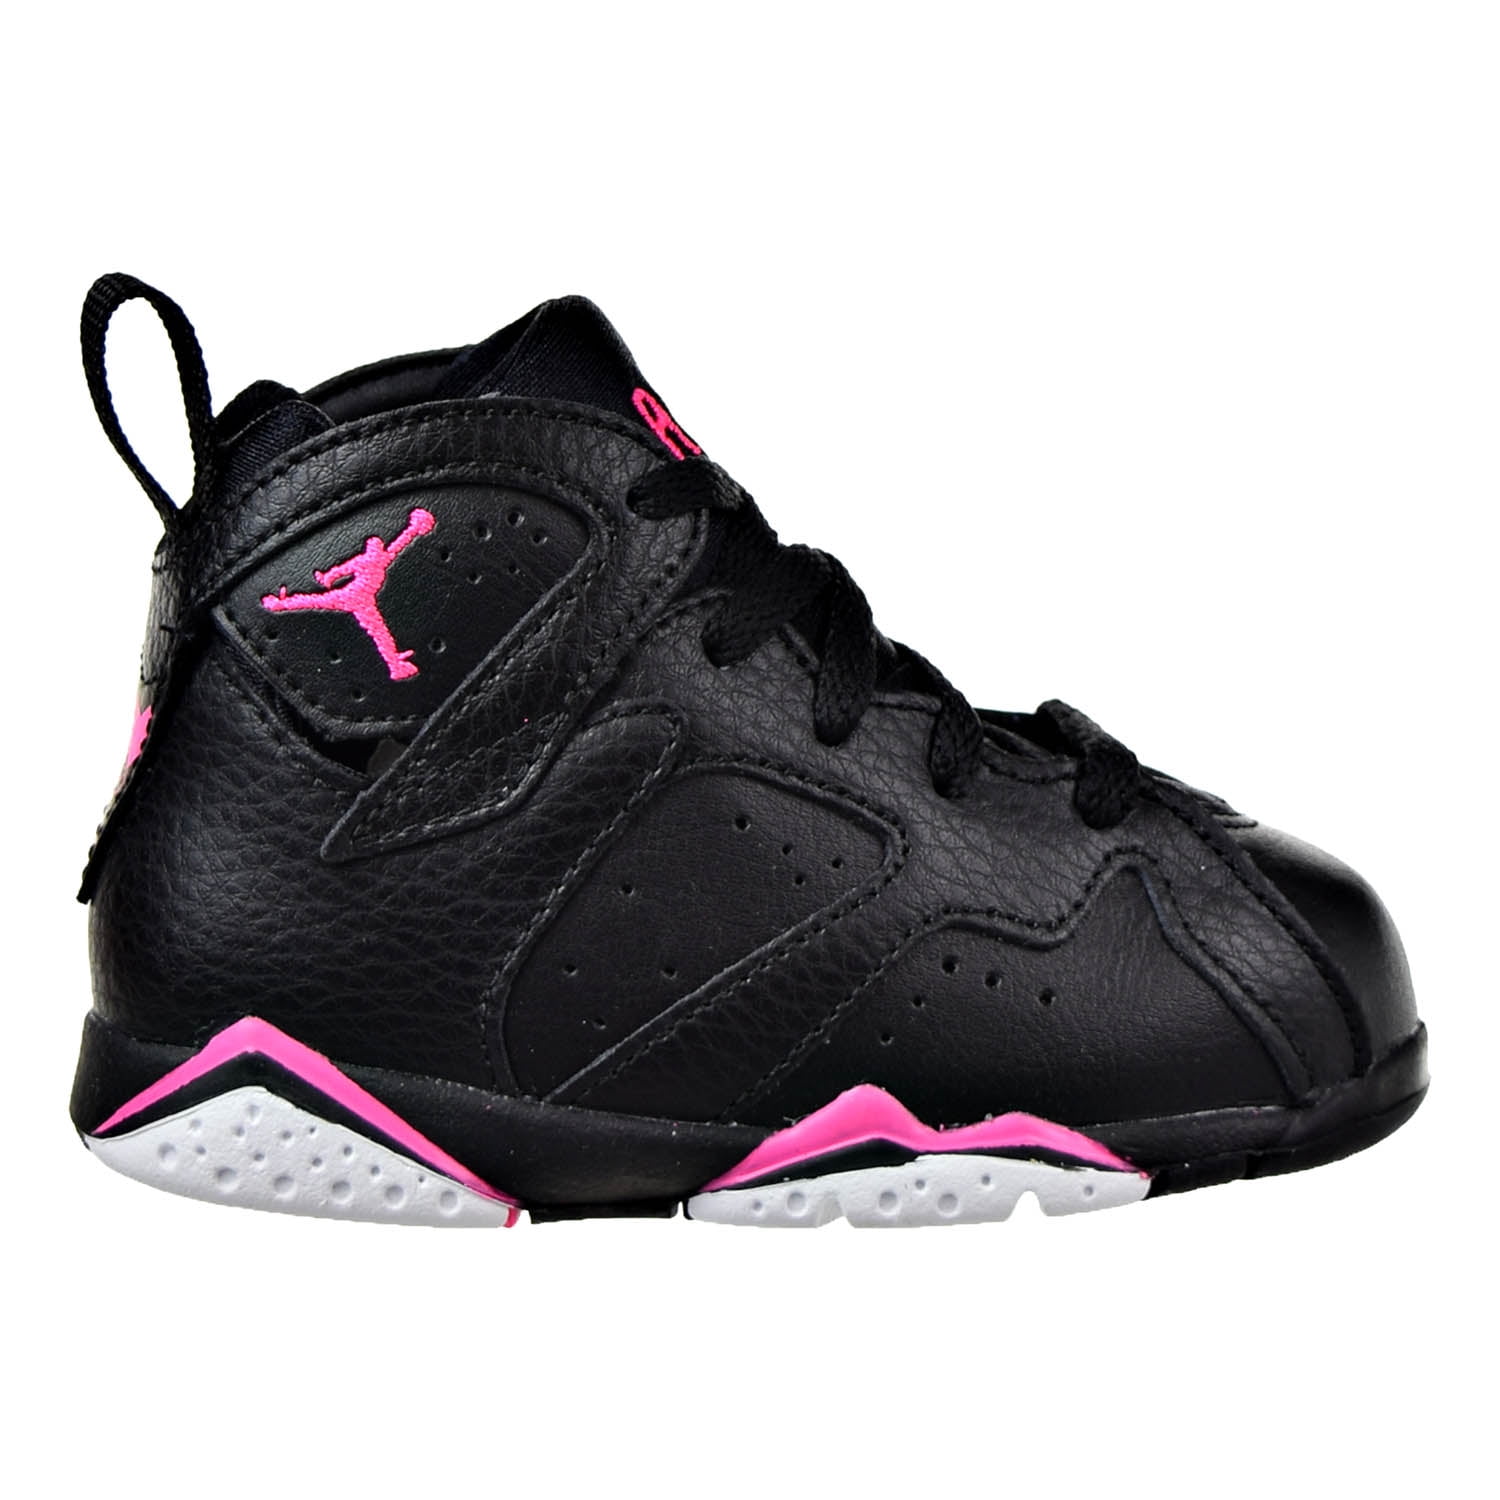 Jordan 7 Retro GT Infants/Toddlers Shoes Black/Hyper Pink 705418-018 -  Walmart.com